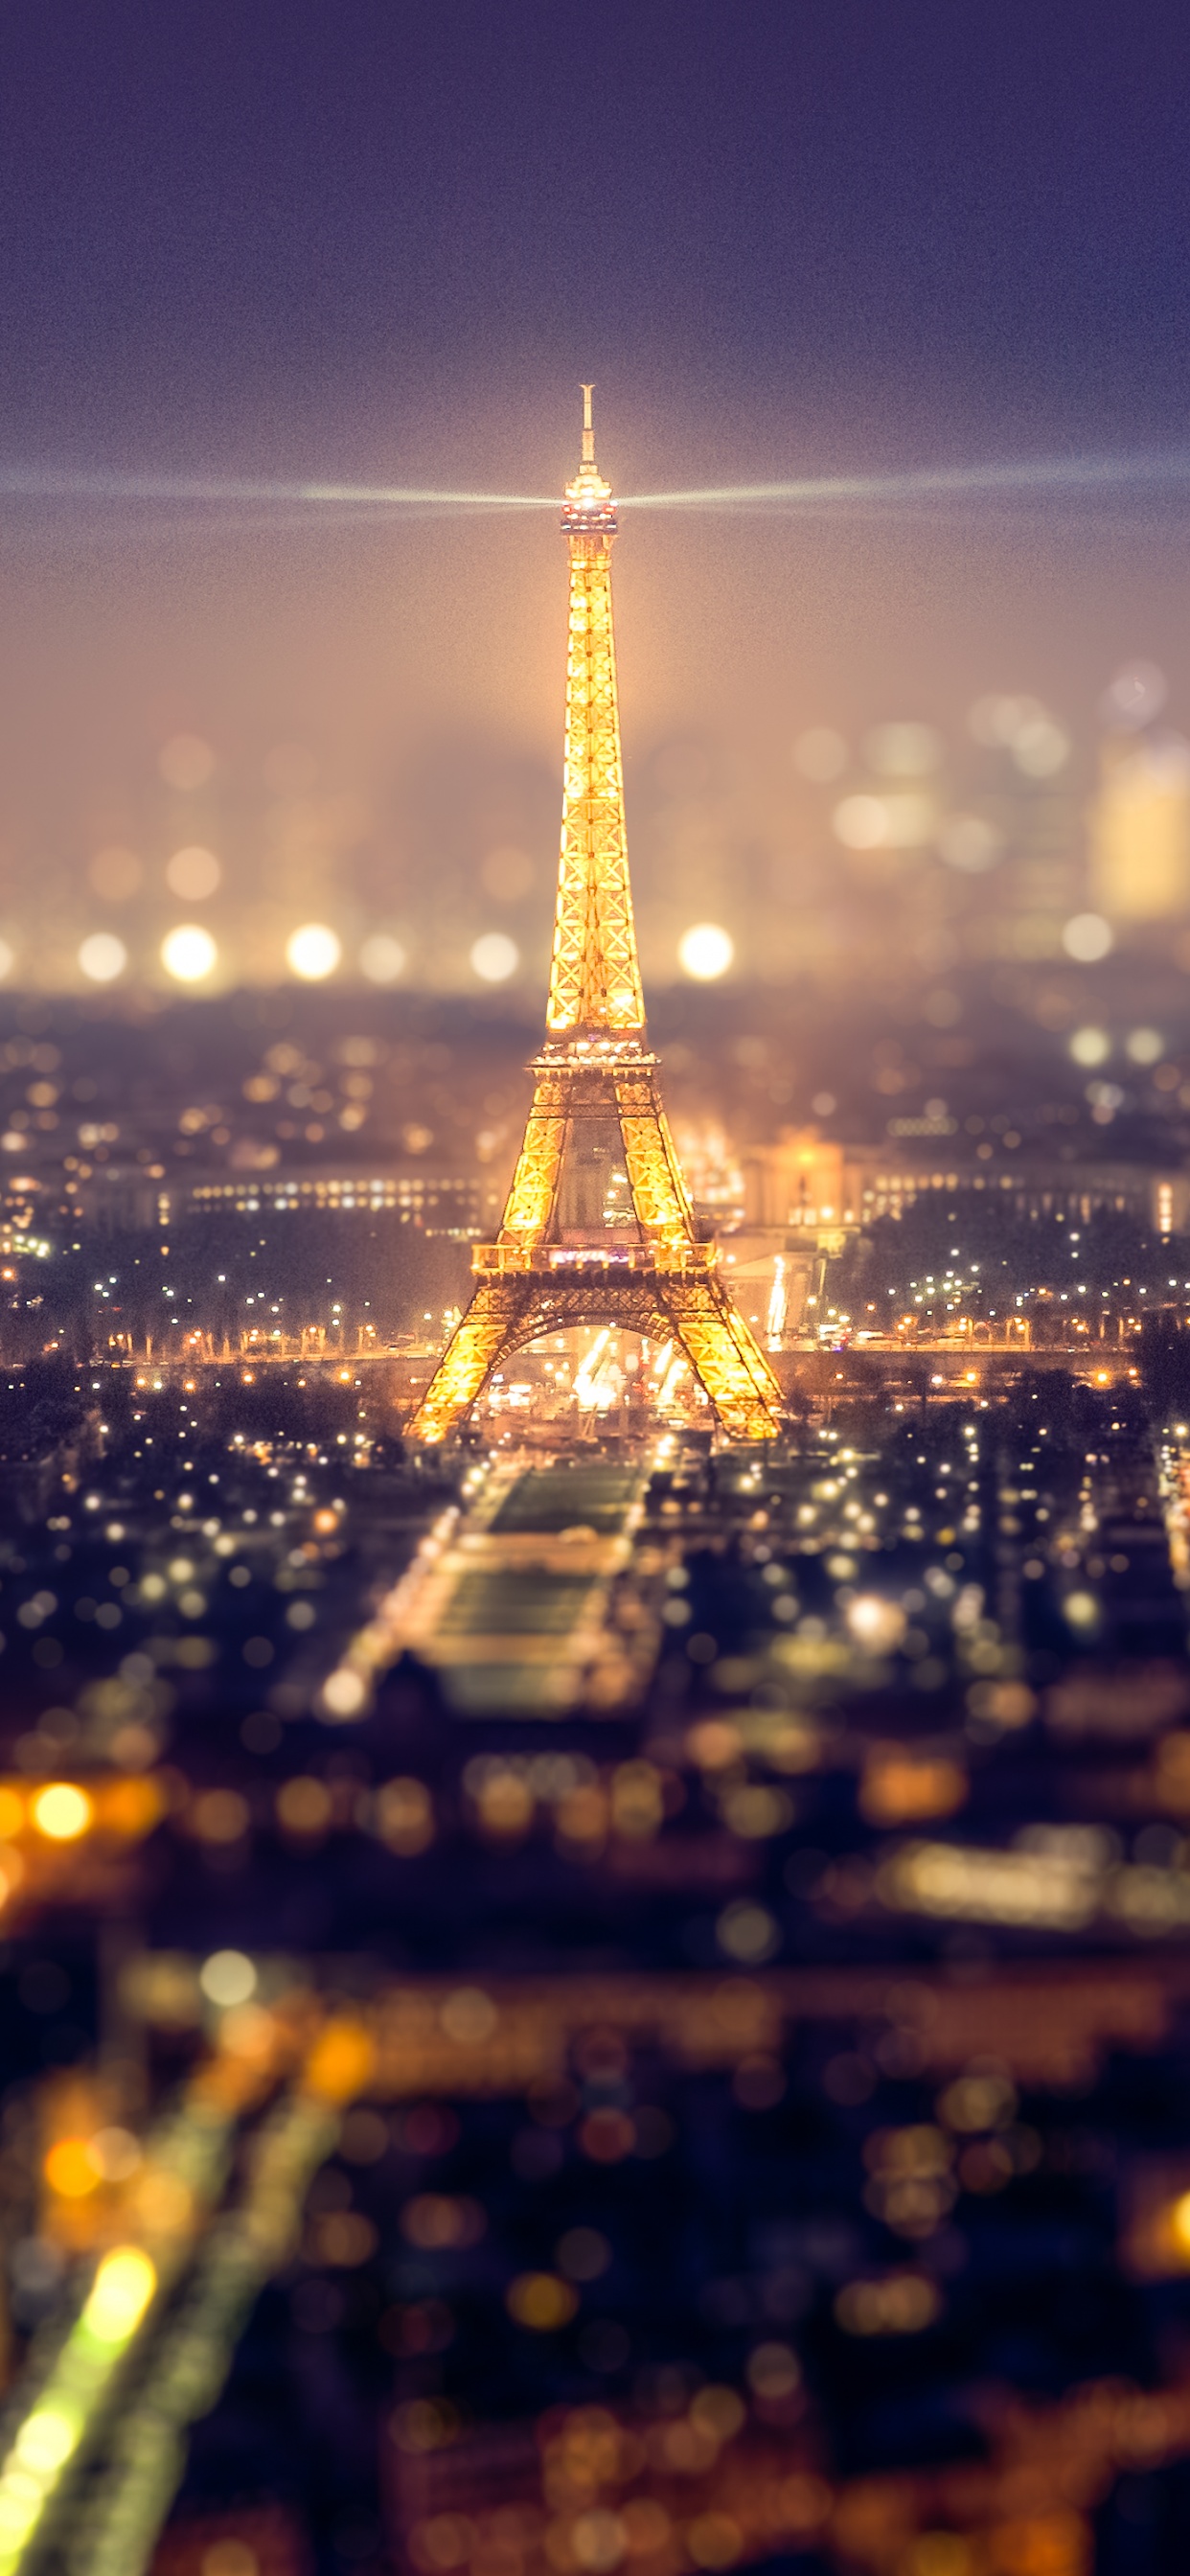 Eiffel Tower 4K Wallpaper, Paris, Night time, City lights